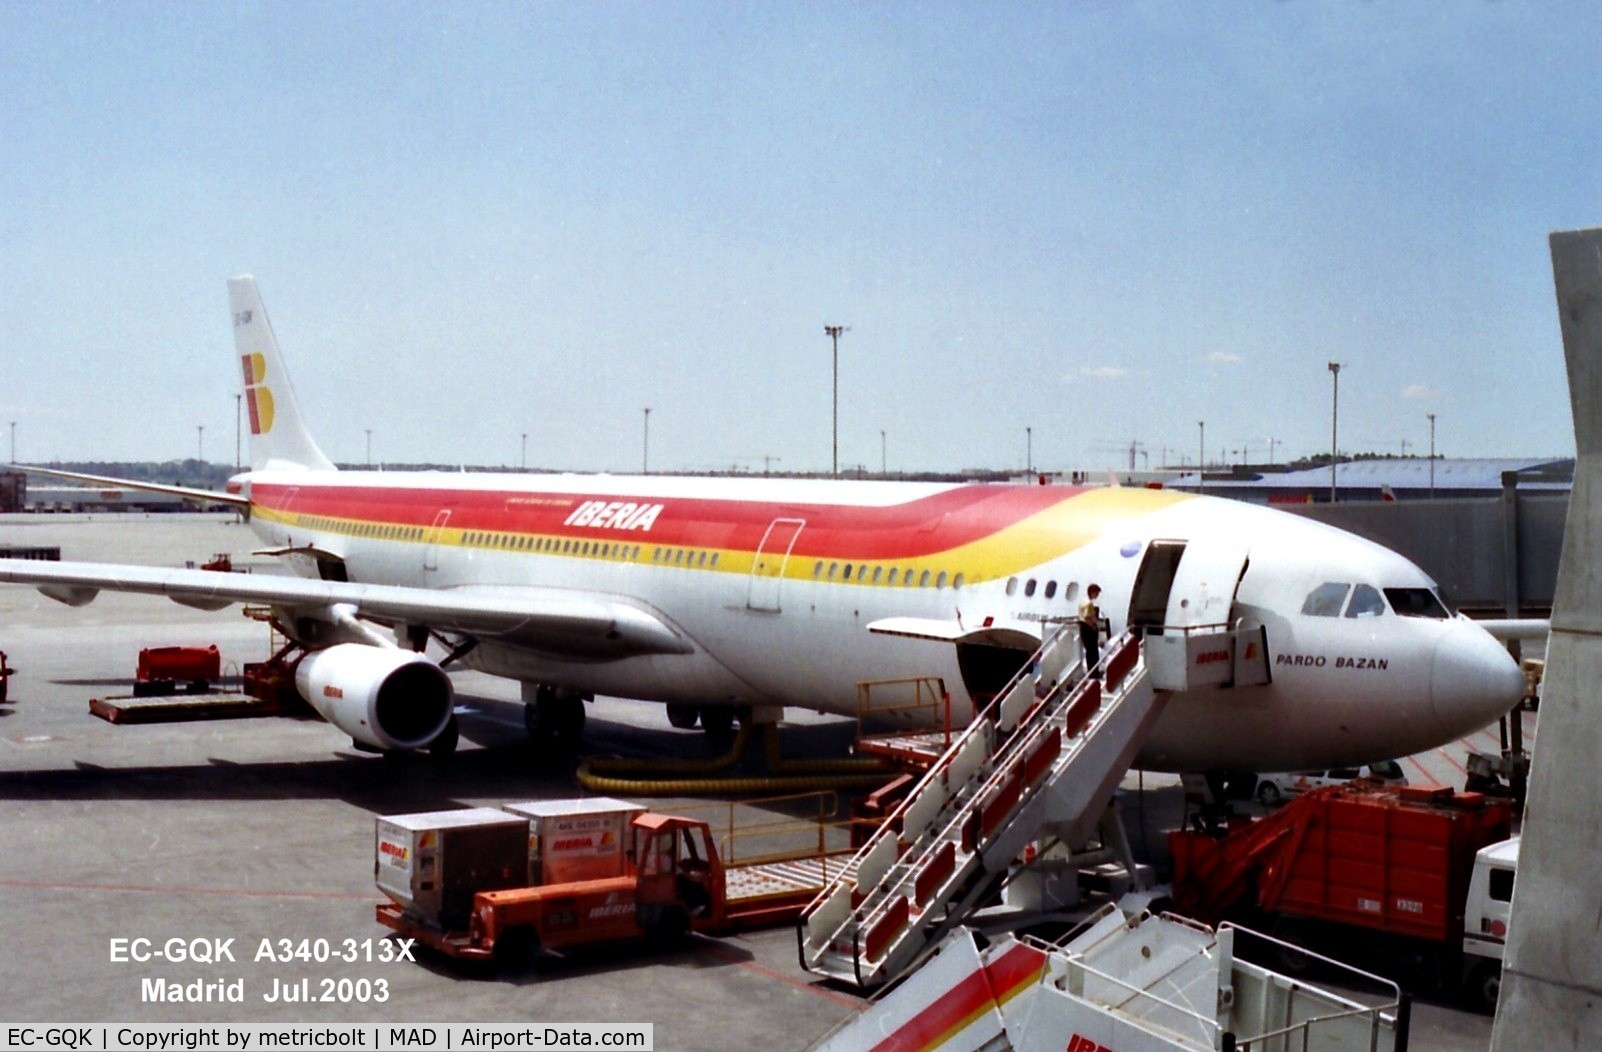 EC-GQK, 1997 Airbus A340-313 C/N 197, Madrid,July 2003